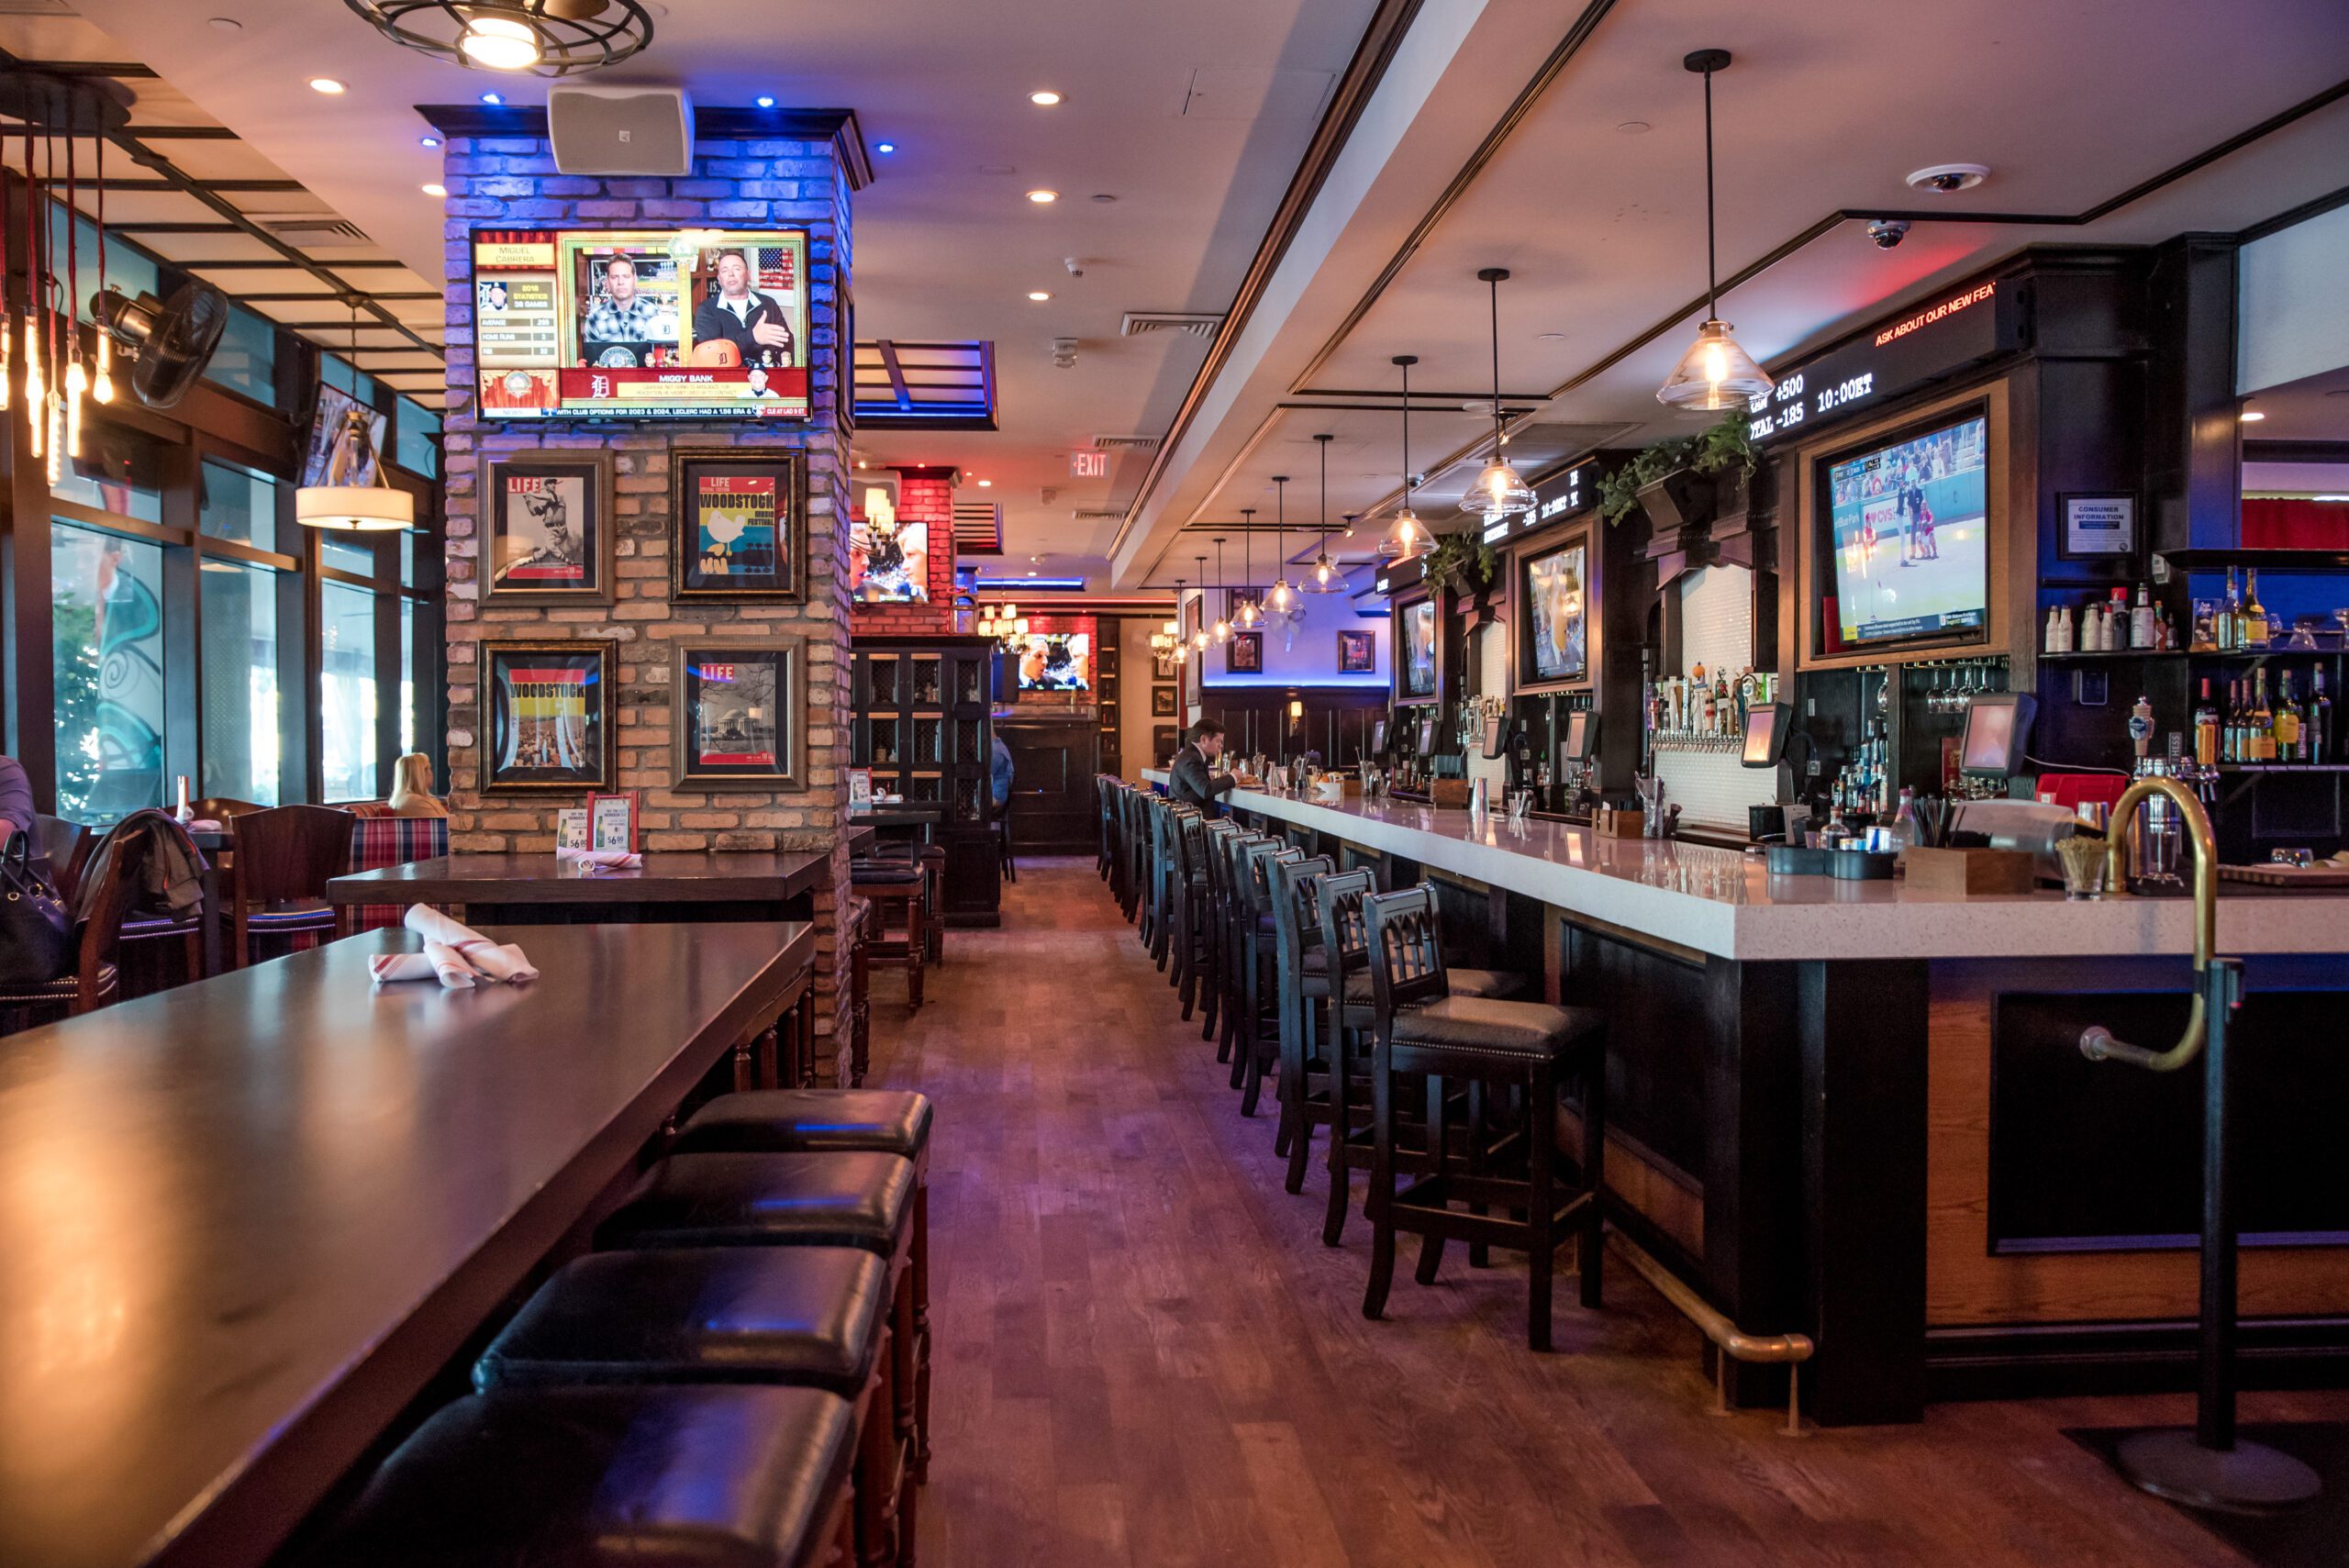 American Social Miami restaurant and bar interior photo.